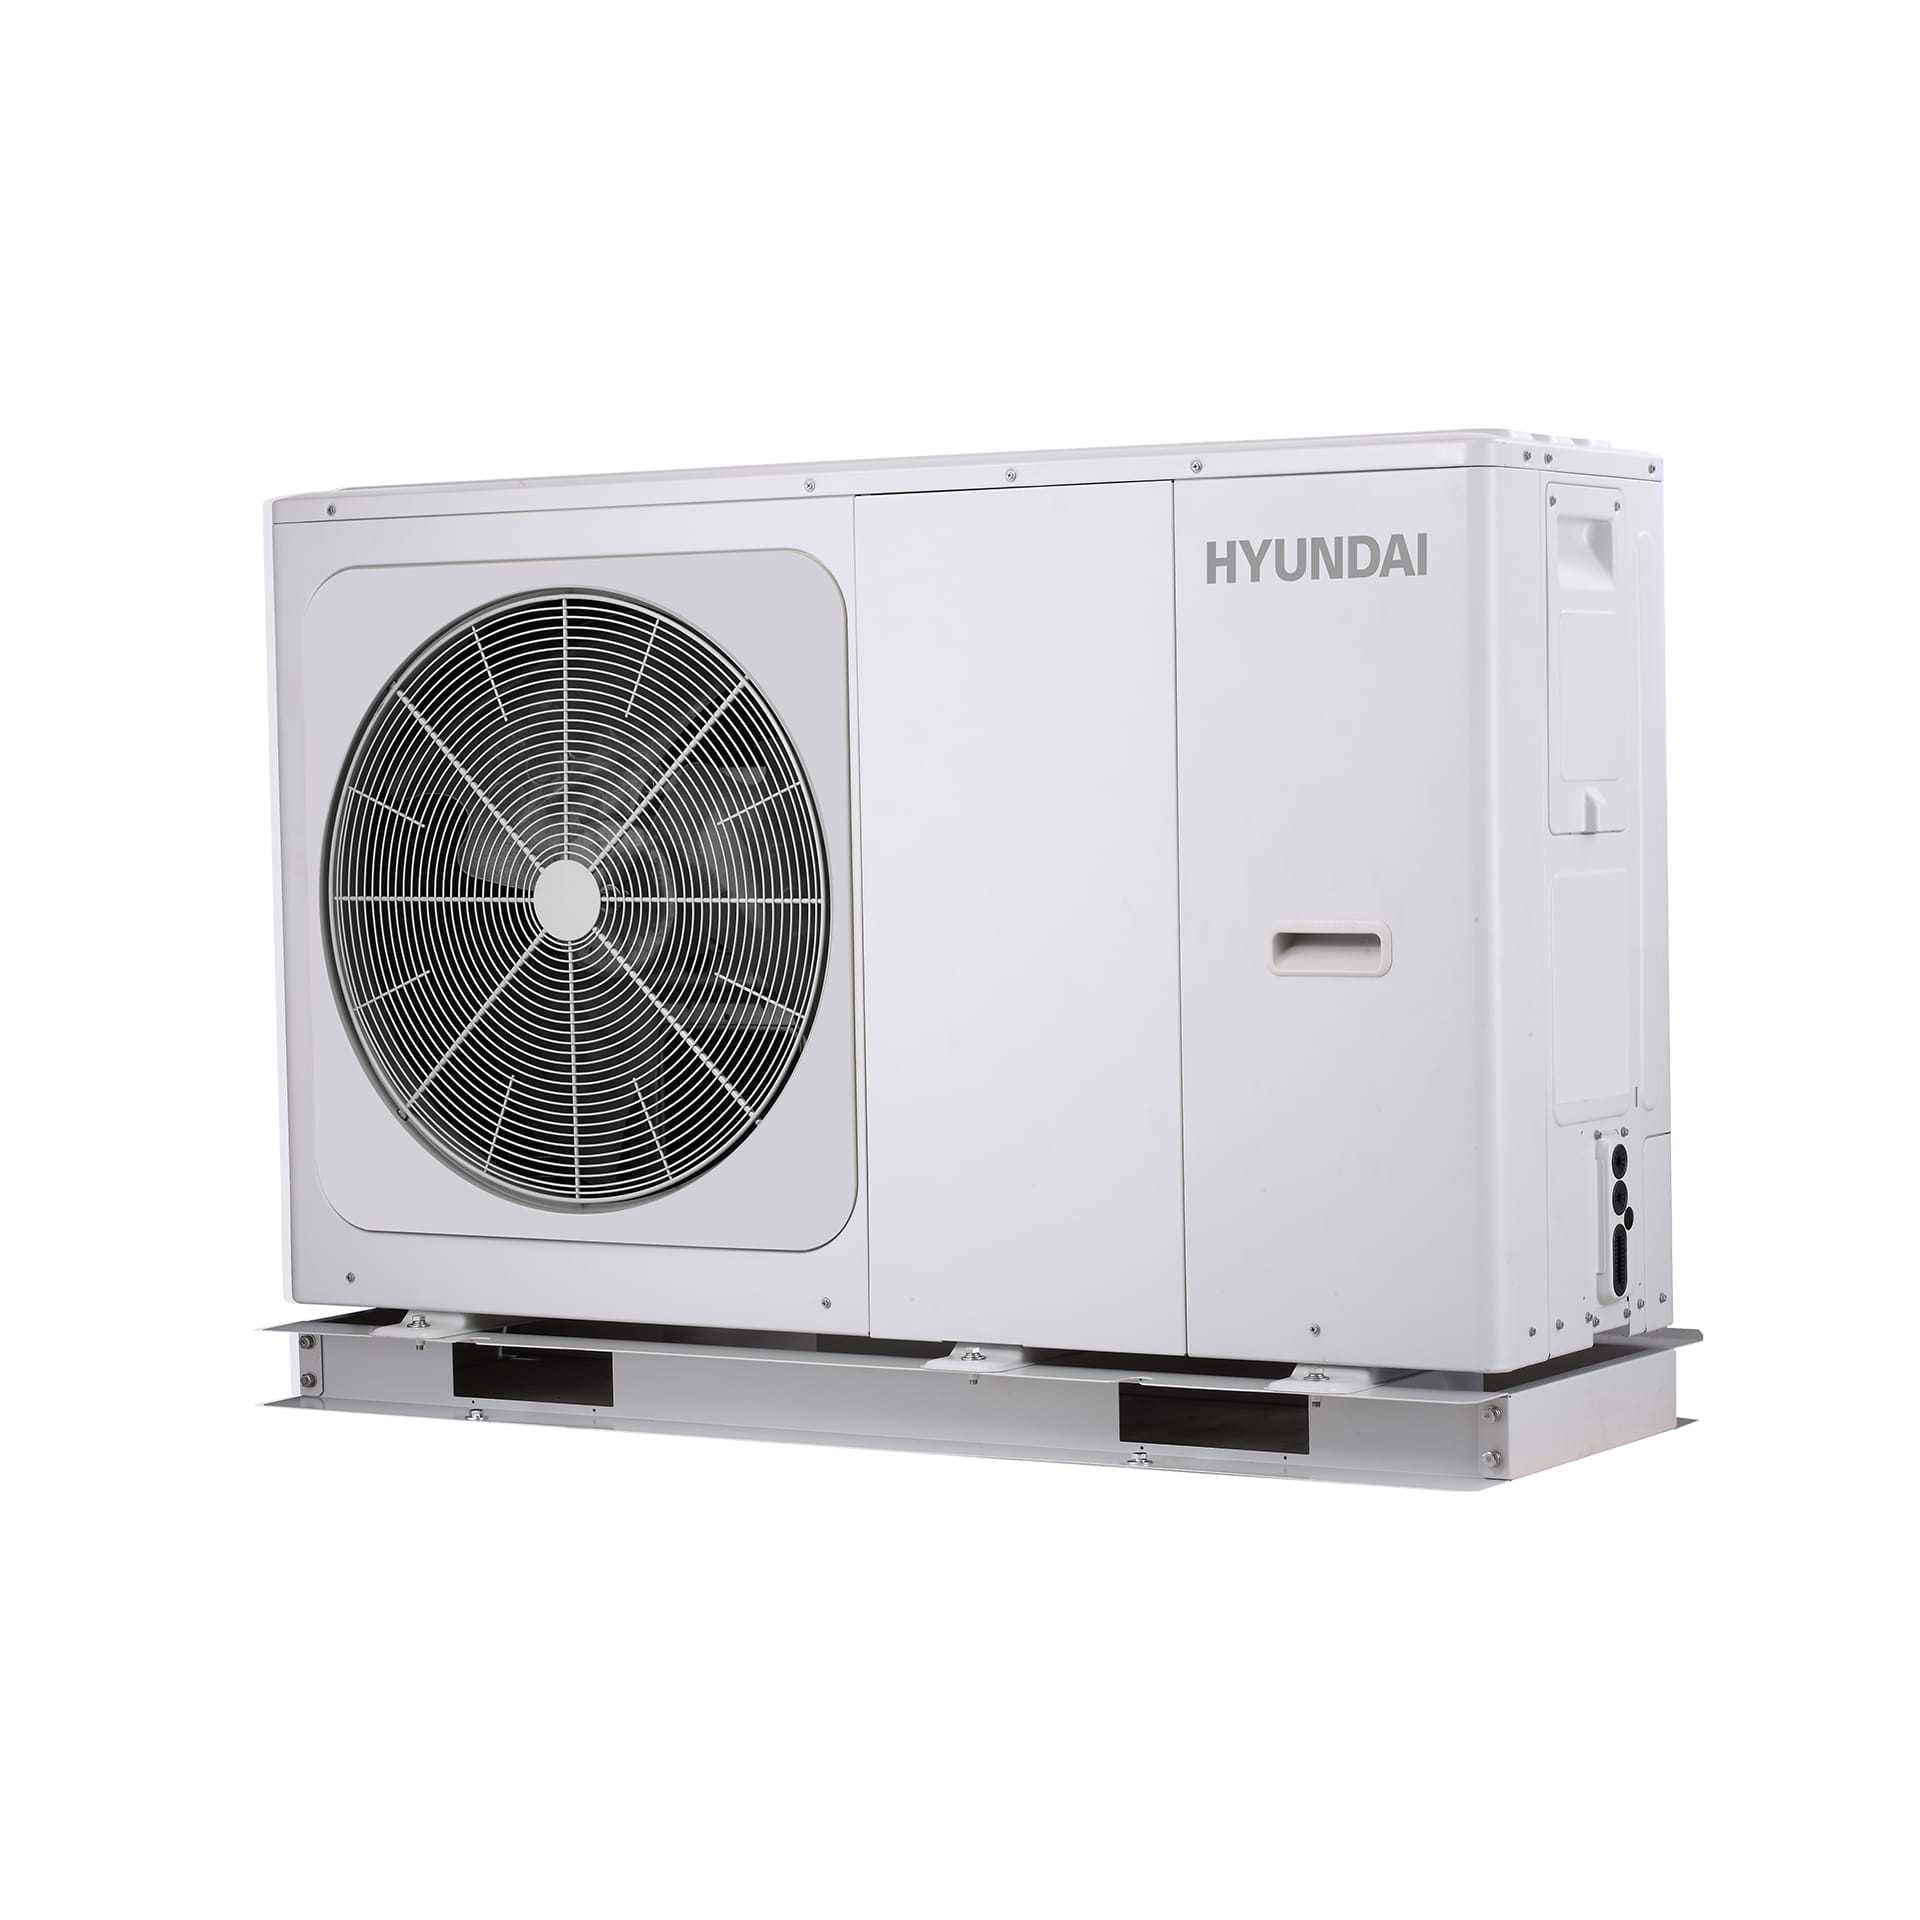 HYUNDAI MONOBLOCK HHPMM4TH1PH 1F 4.40kW heat pump